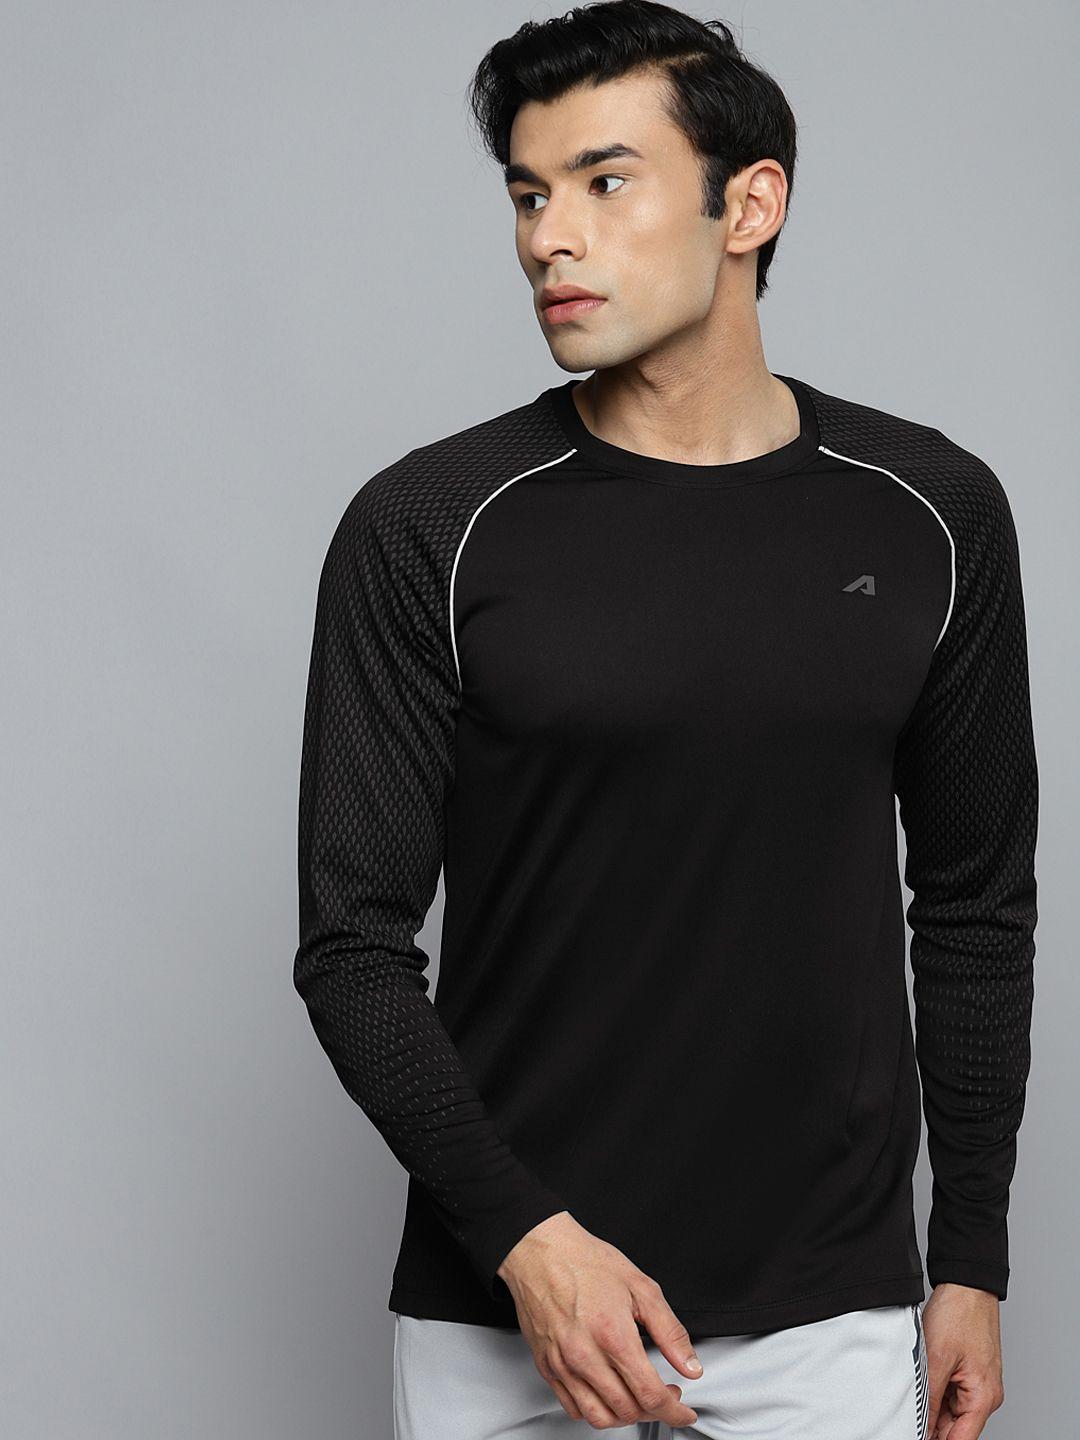 alcis-men-black-slim-fit-training-or-gym-t-shirt